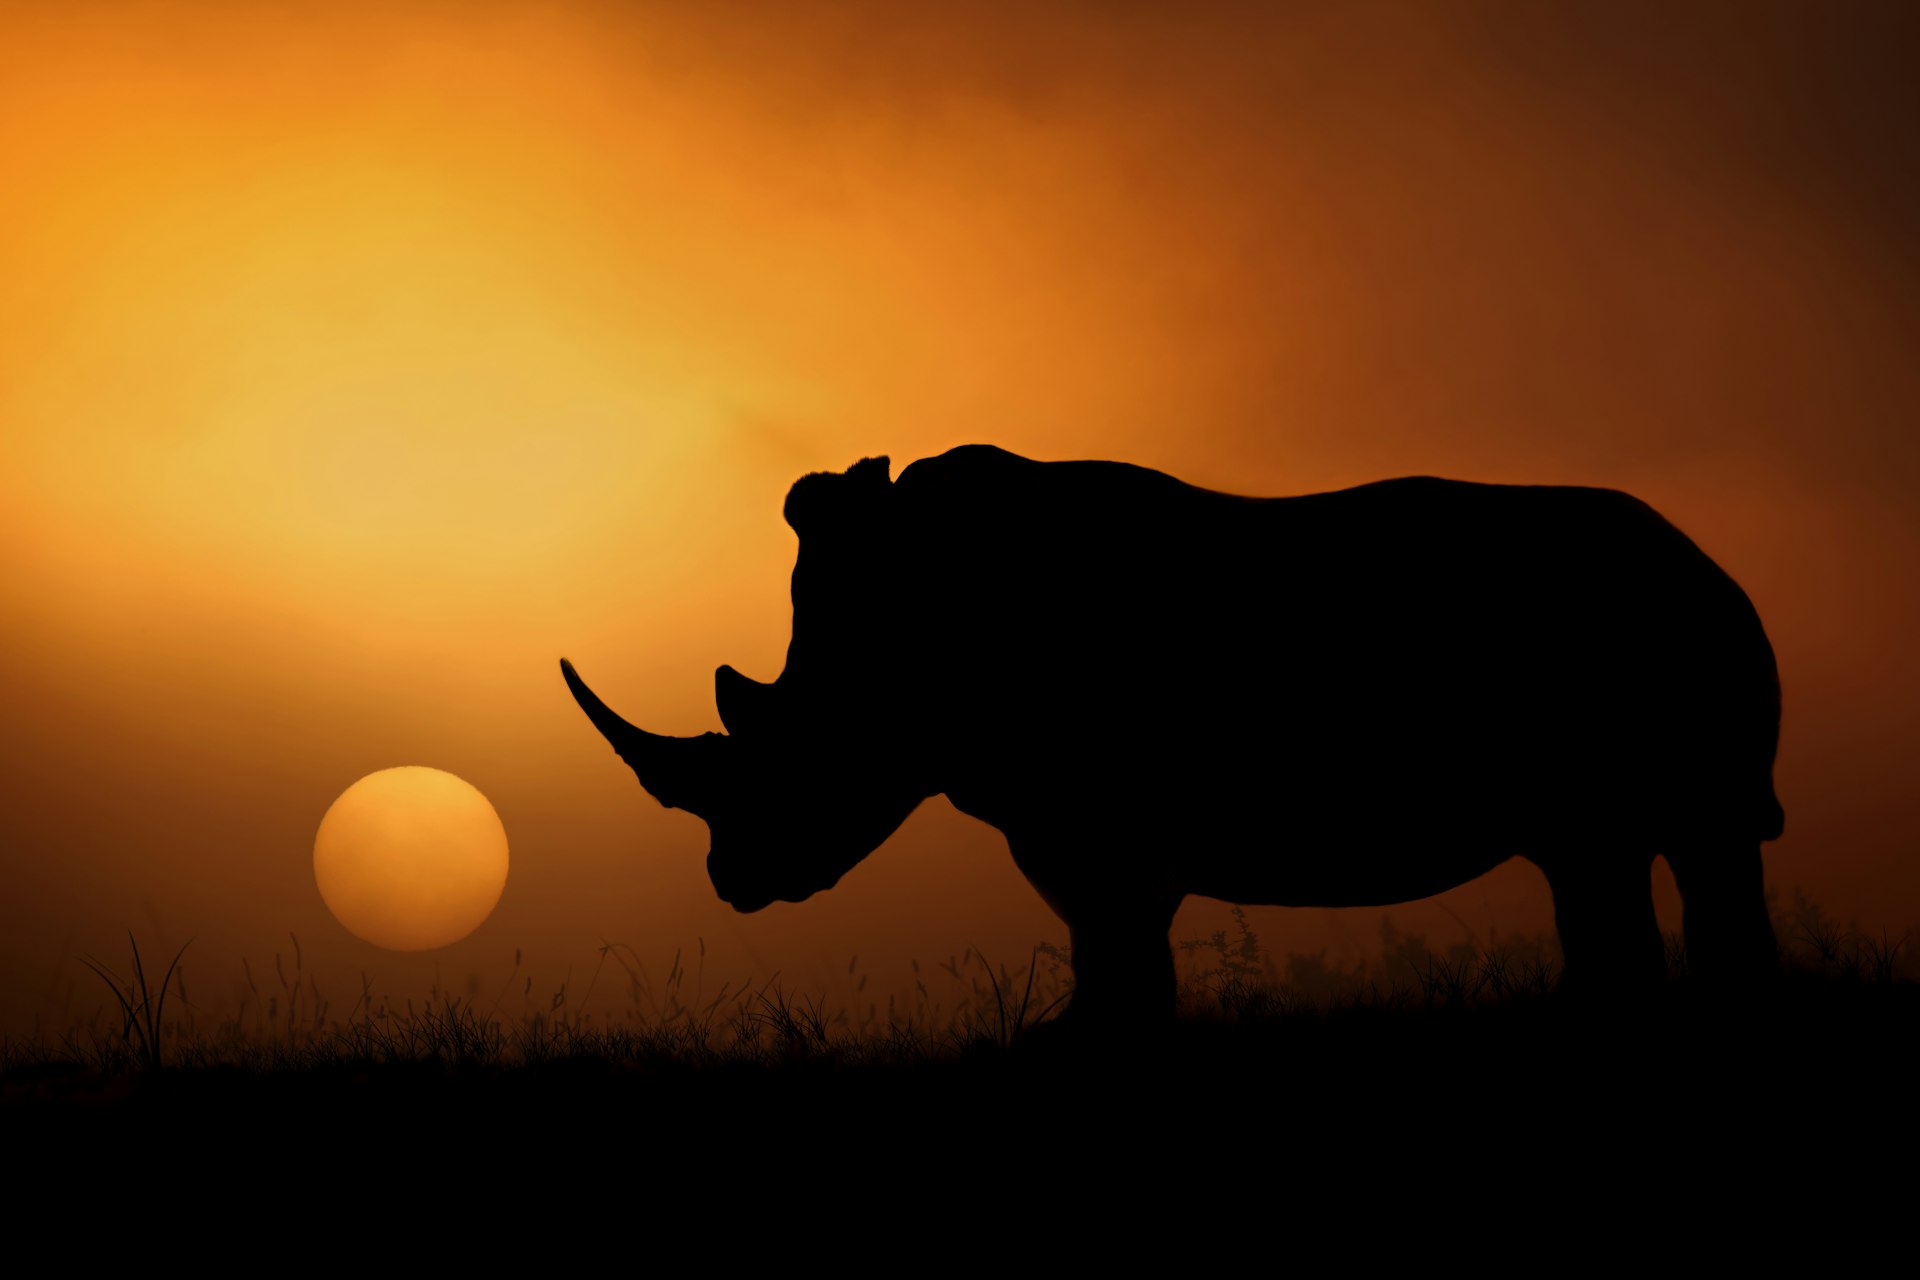 A rhino backlit by the sunrise